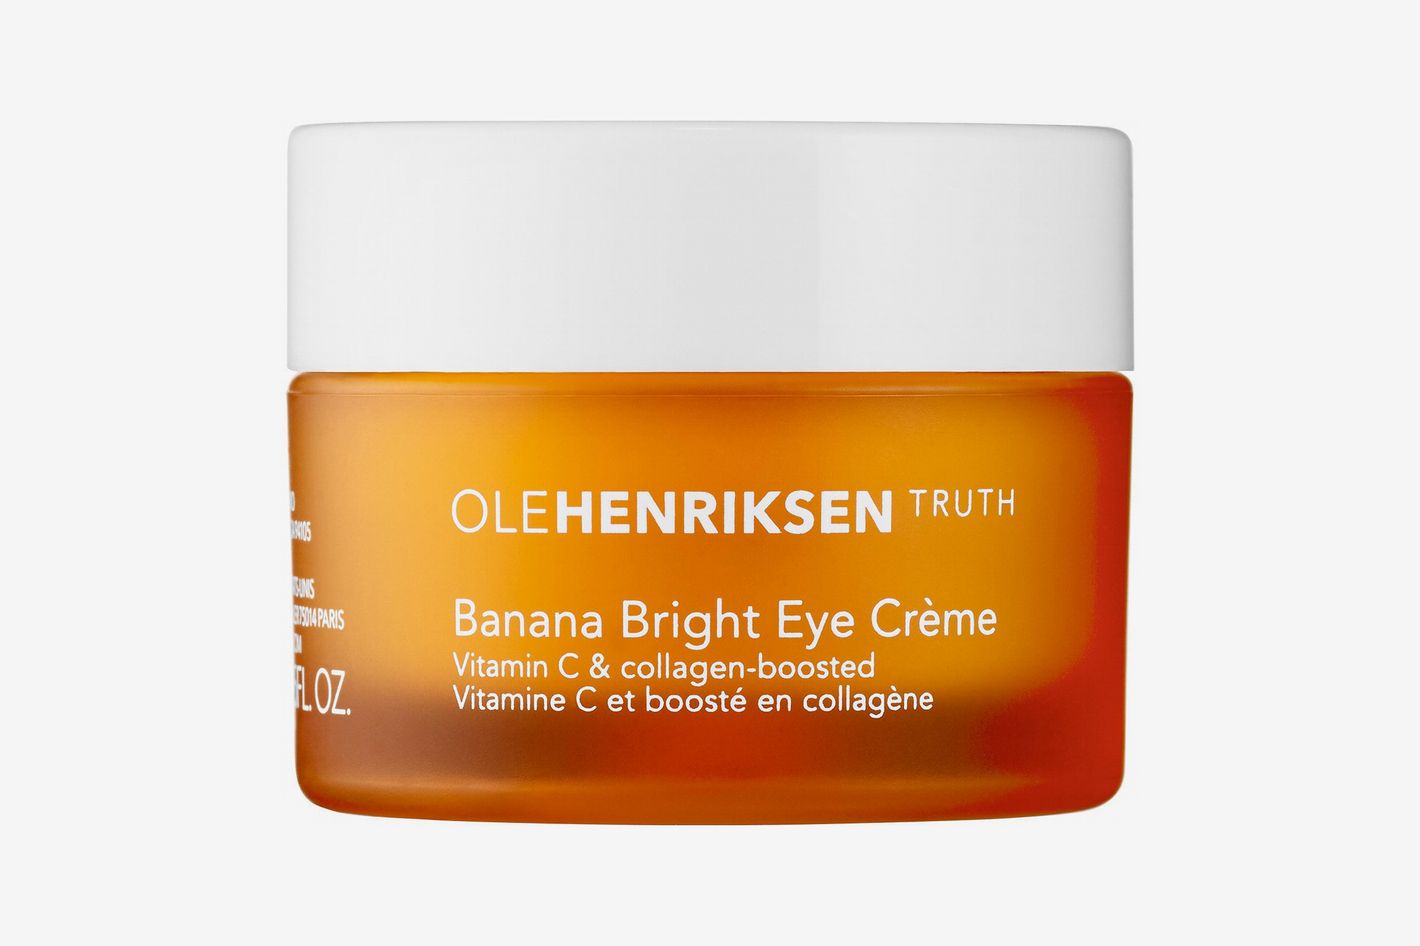 OLEHENRIKSEN Banana Bright Eye Cream Review - Does It Really Work? 